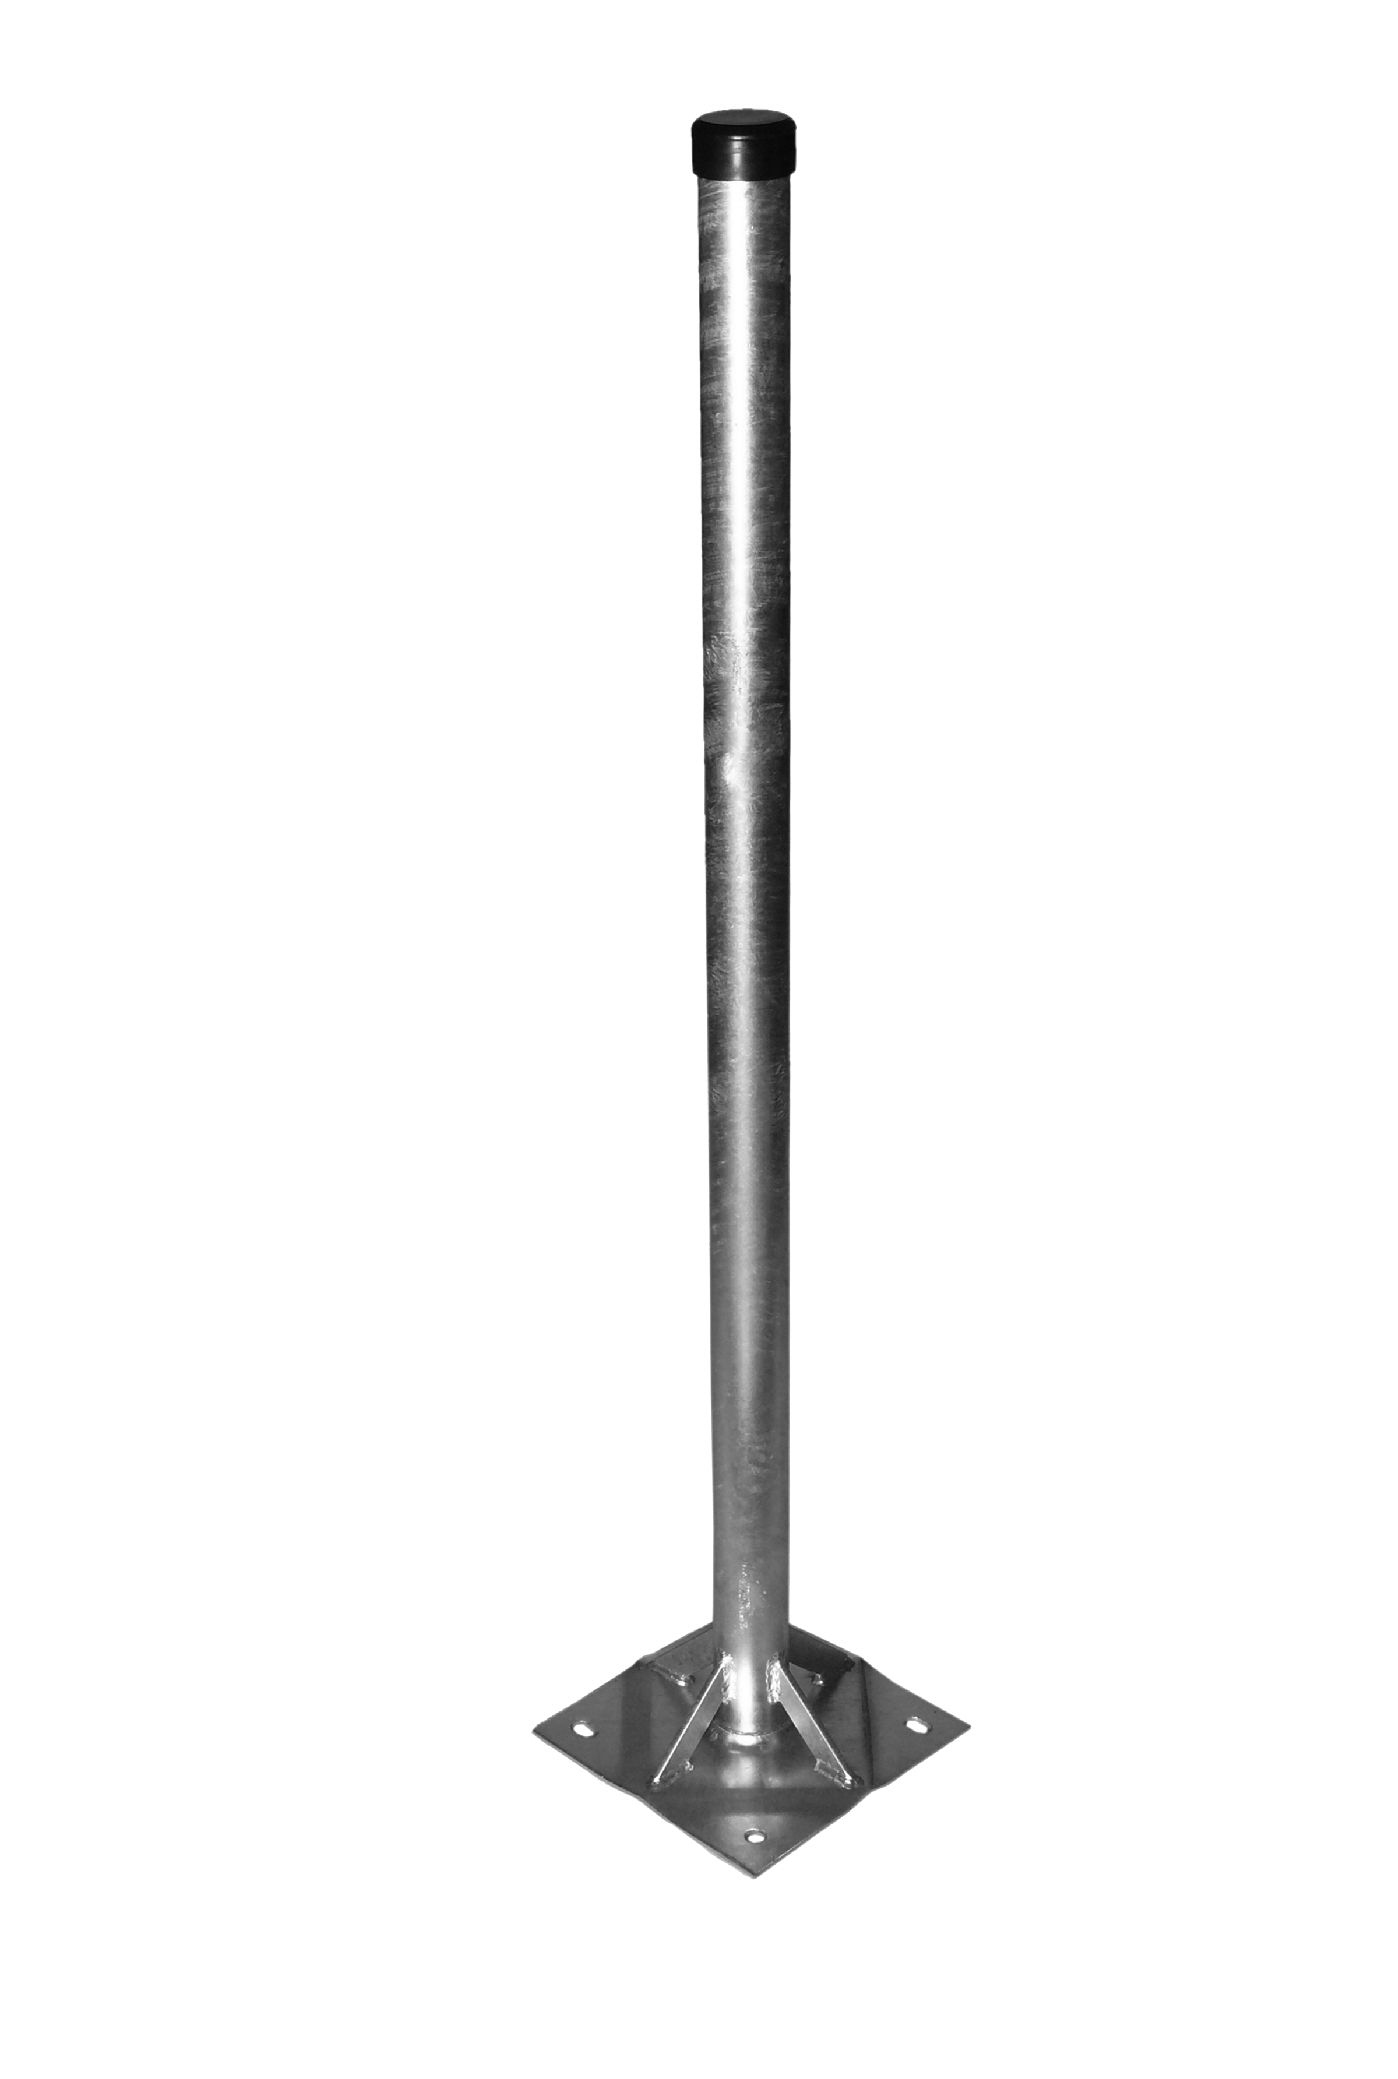 A.S.SAT Stahl Standfuß 1,0m, Rohr Ø48mm, verstrebt